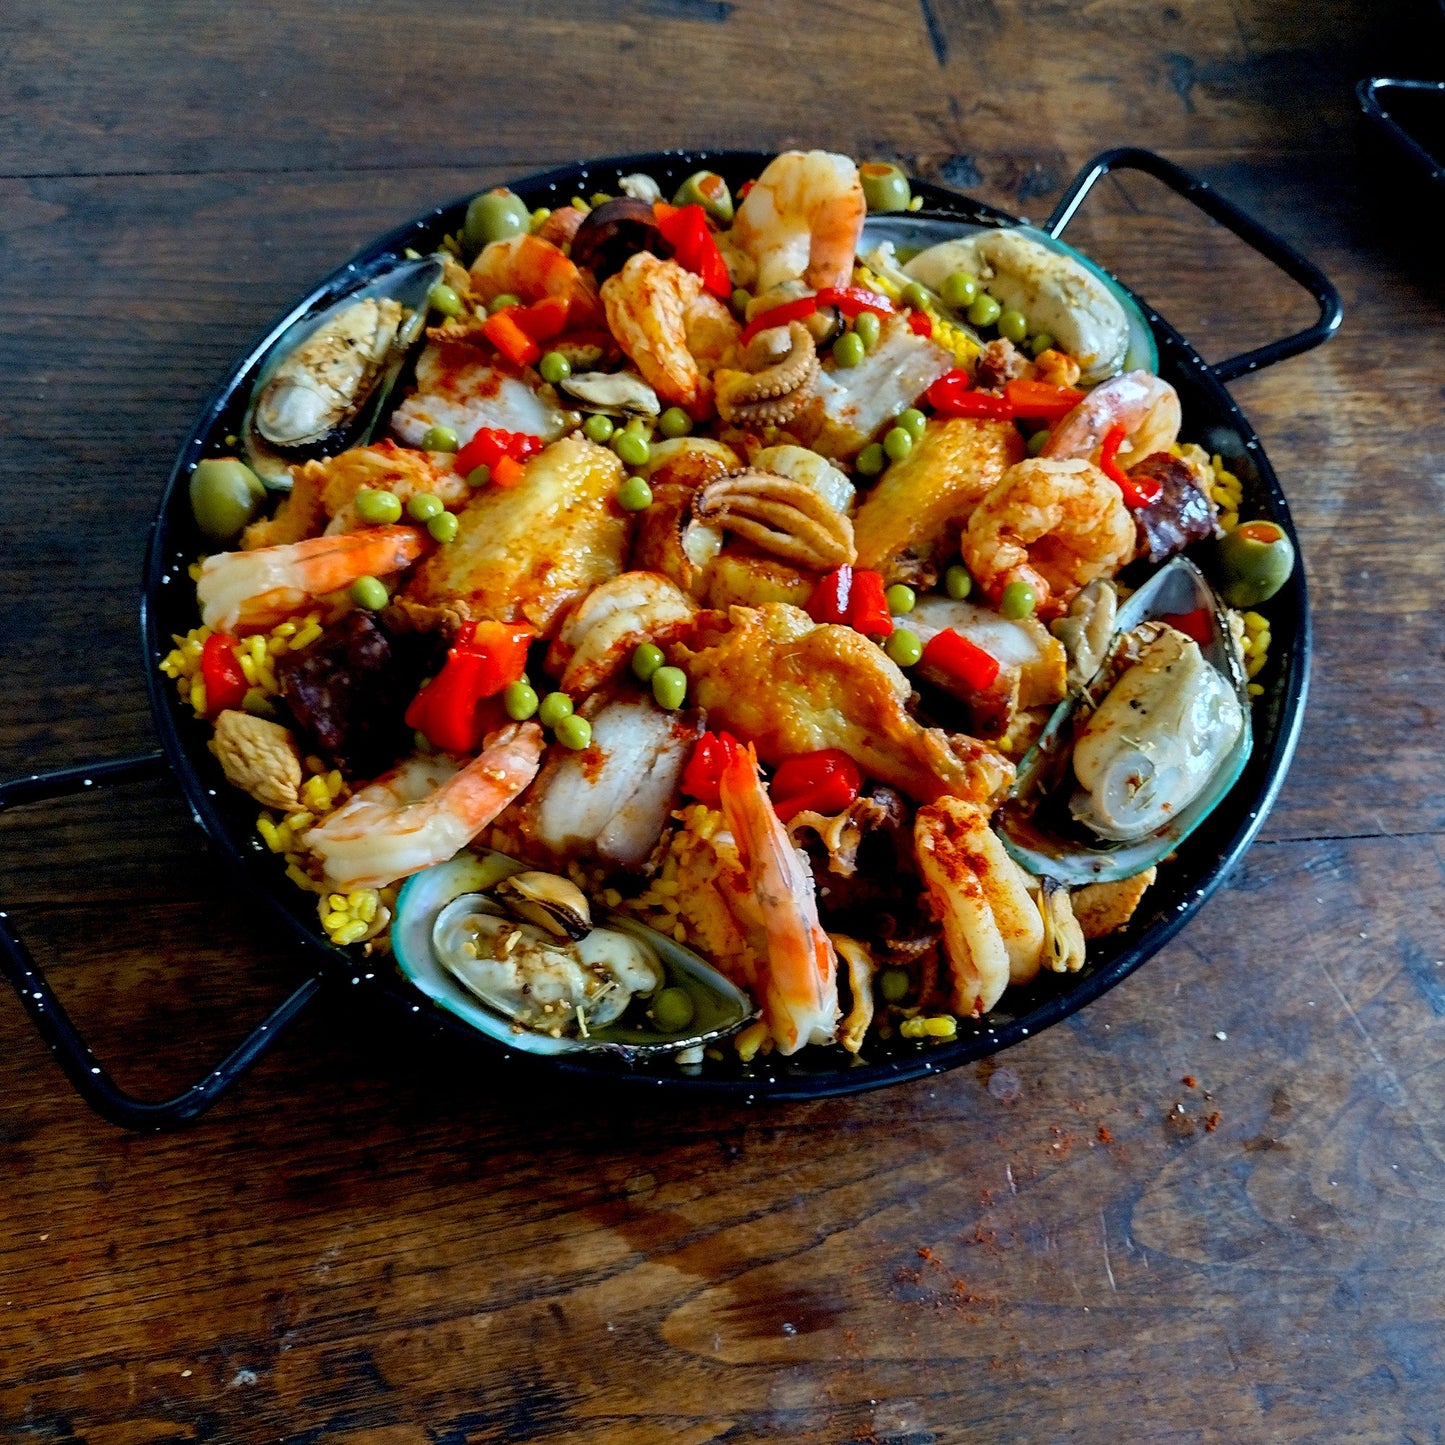 Seafood porkbelly morcilla chicken chorizo paella for 4 guests.